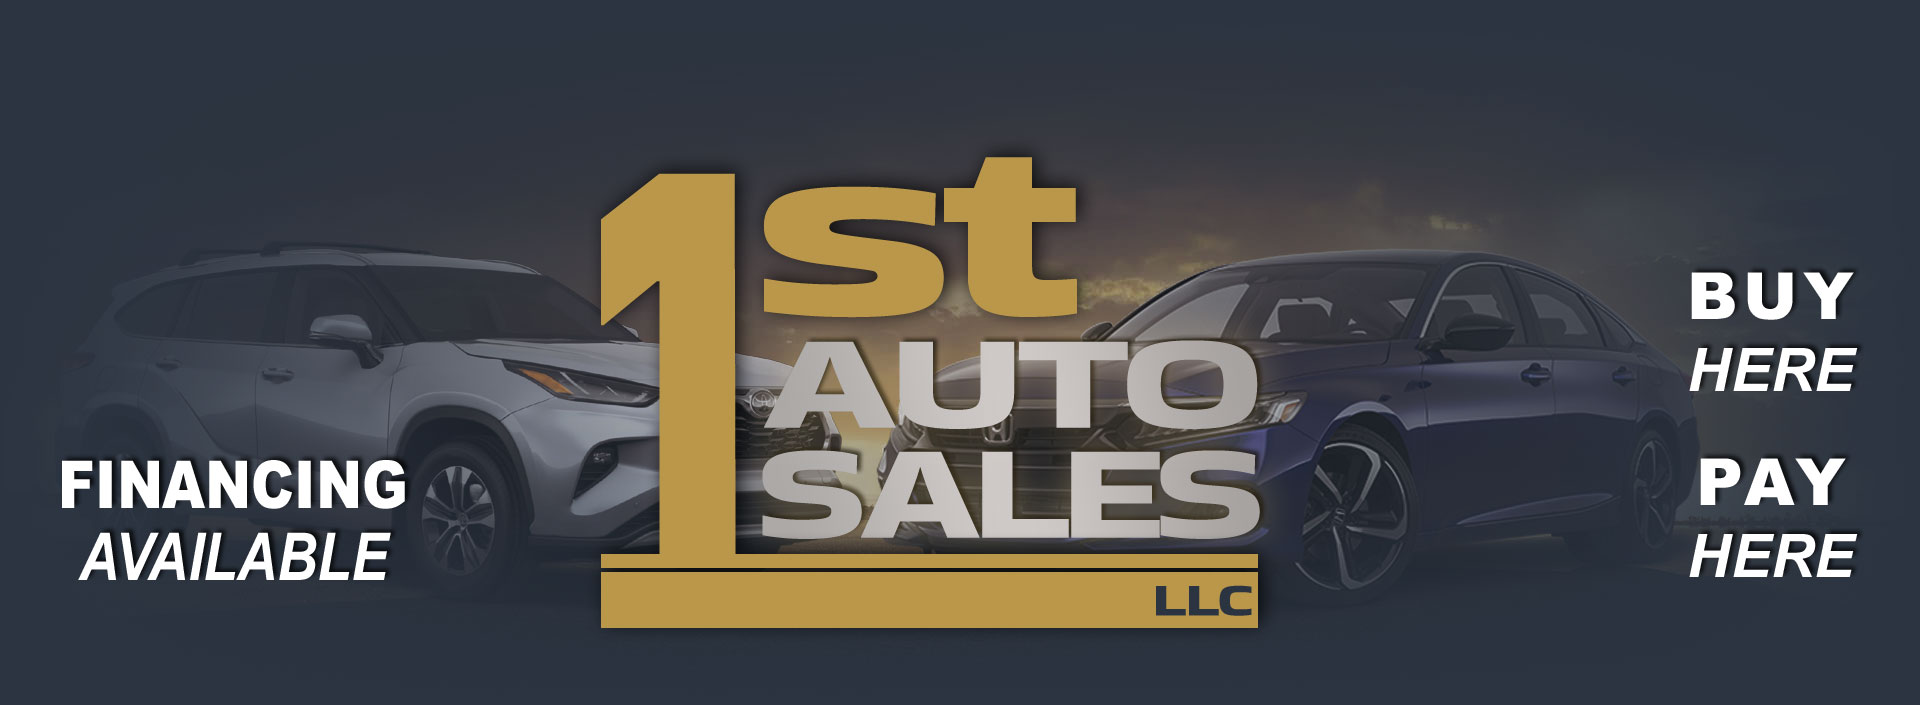 1st Auto Sales LLC